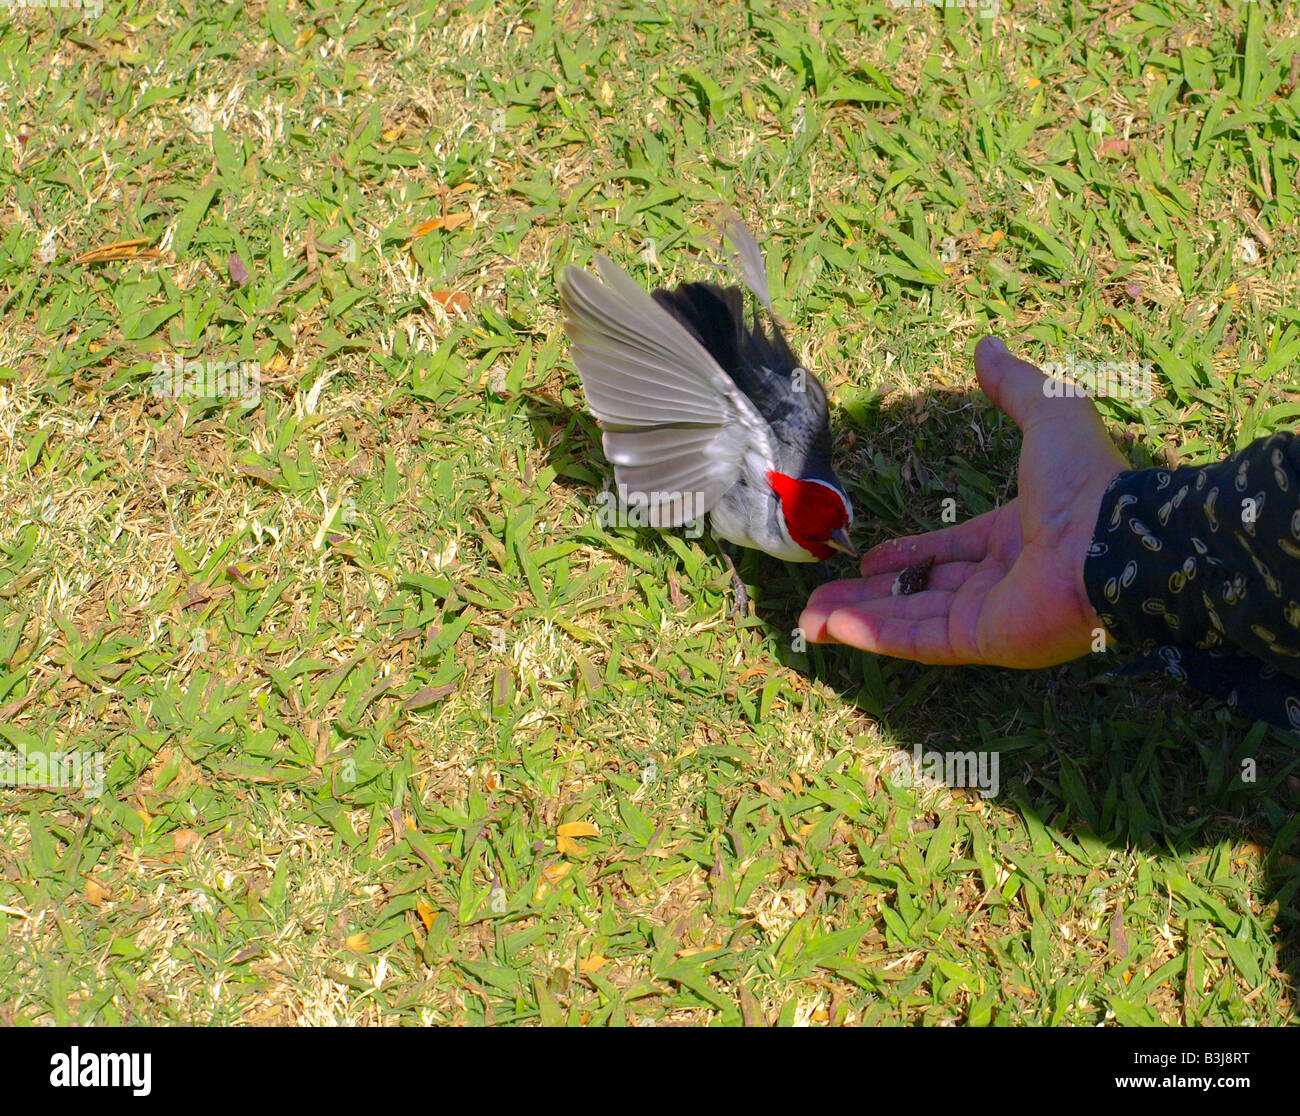 hand feeding a red cardinal bird Stock Photo